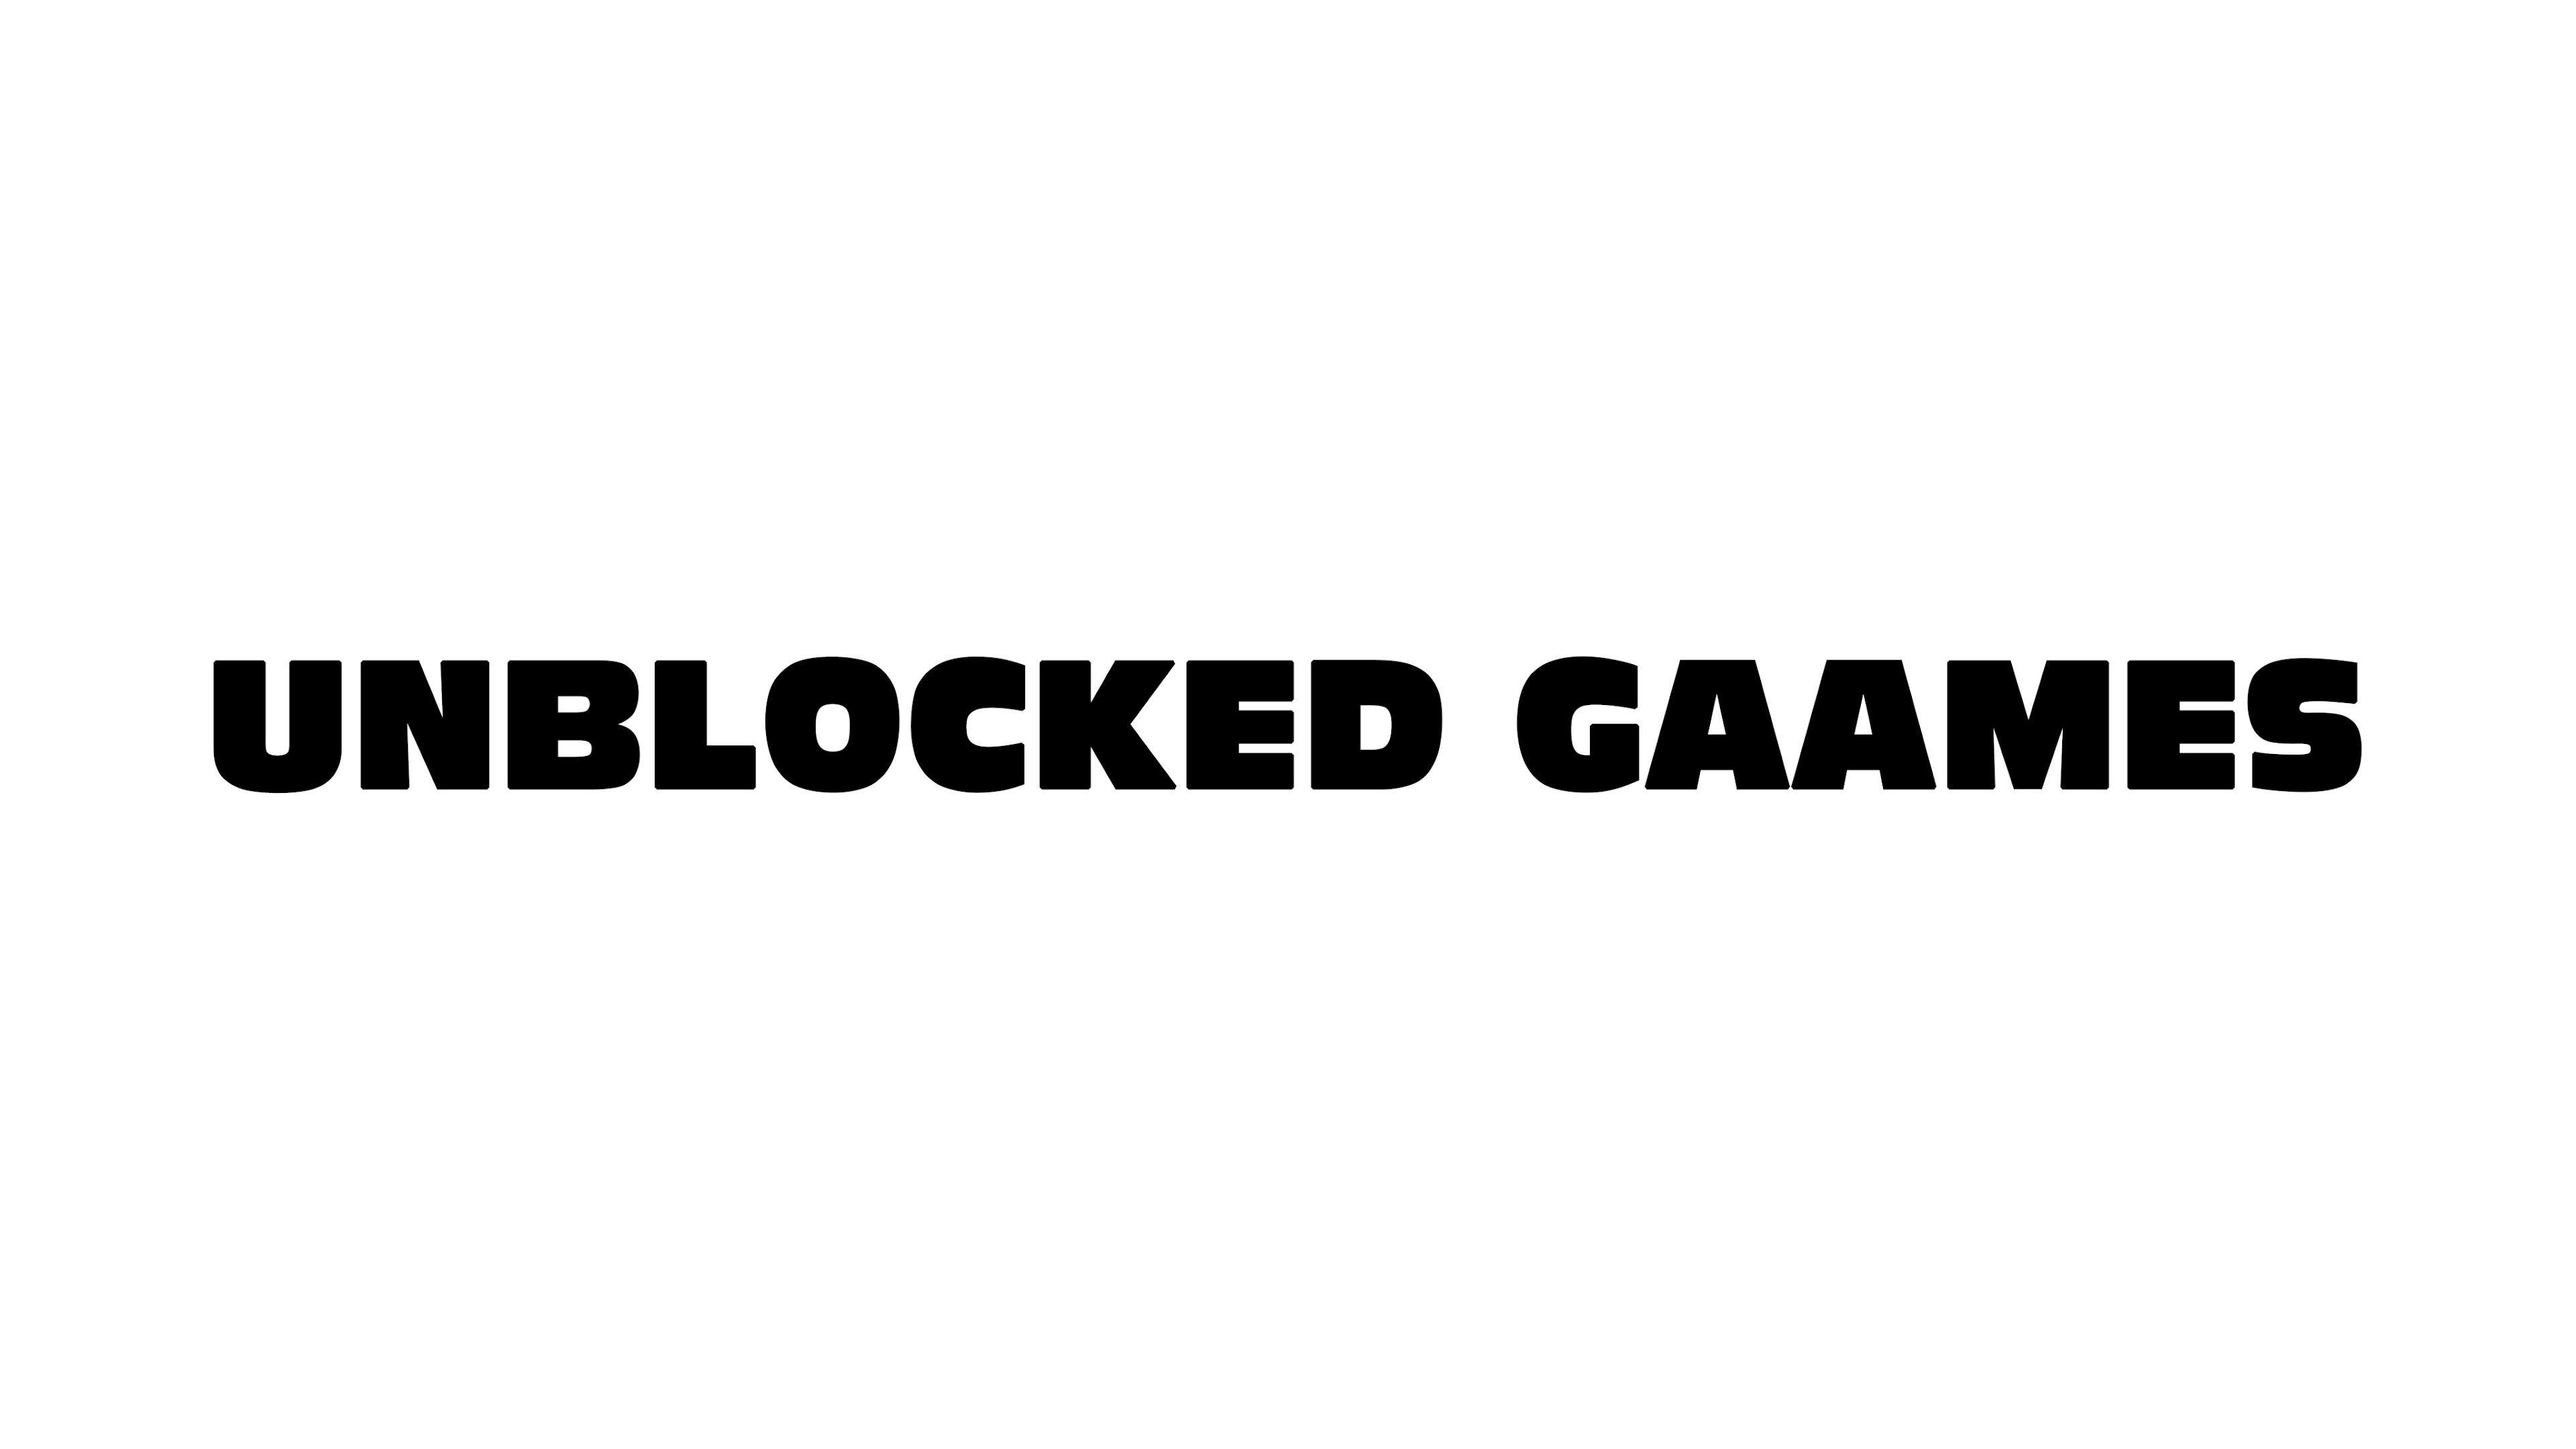 New Unblocked Games Websites for School (Unblocked Games Premium) 